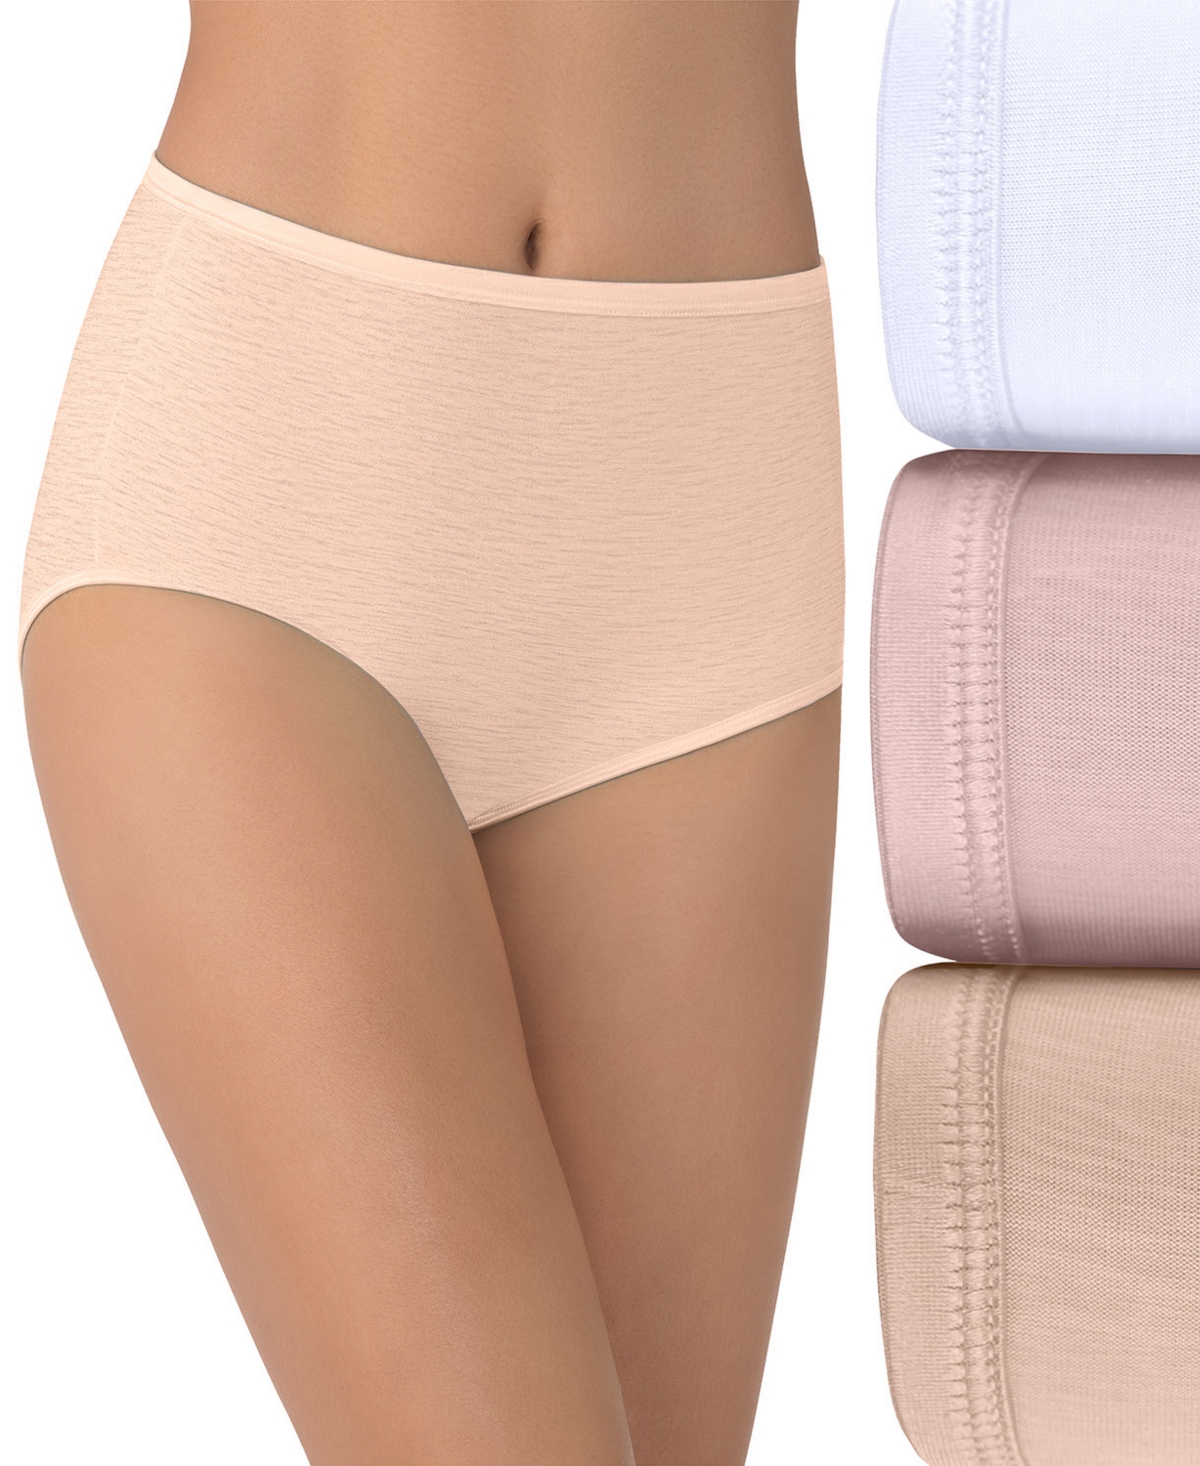 Women's 3-Pk. Illumination Brief Underwear 13310 - Swh Multi